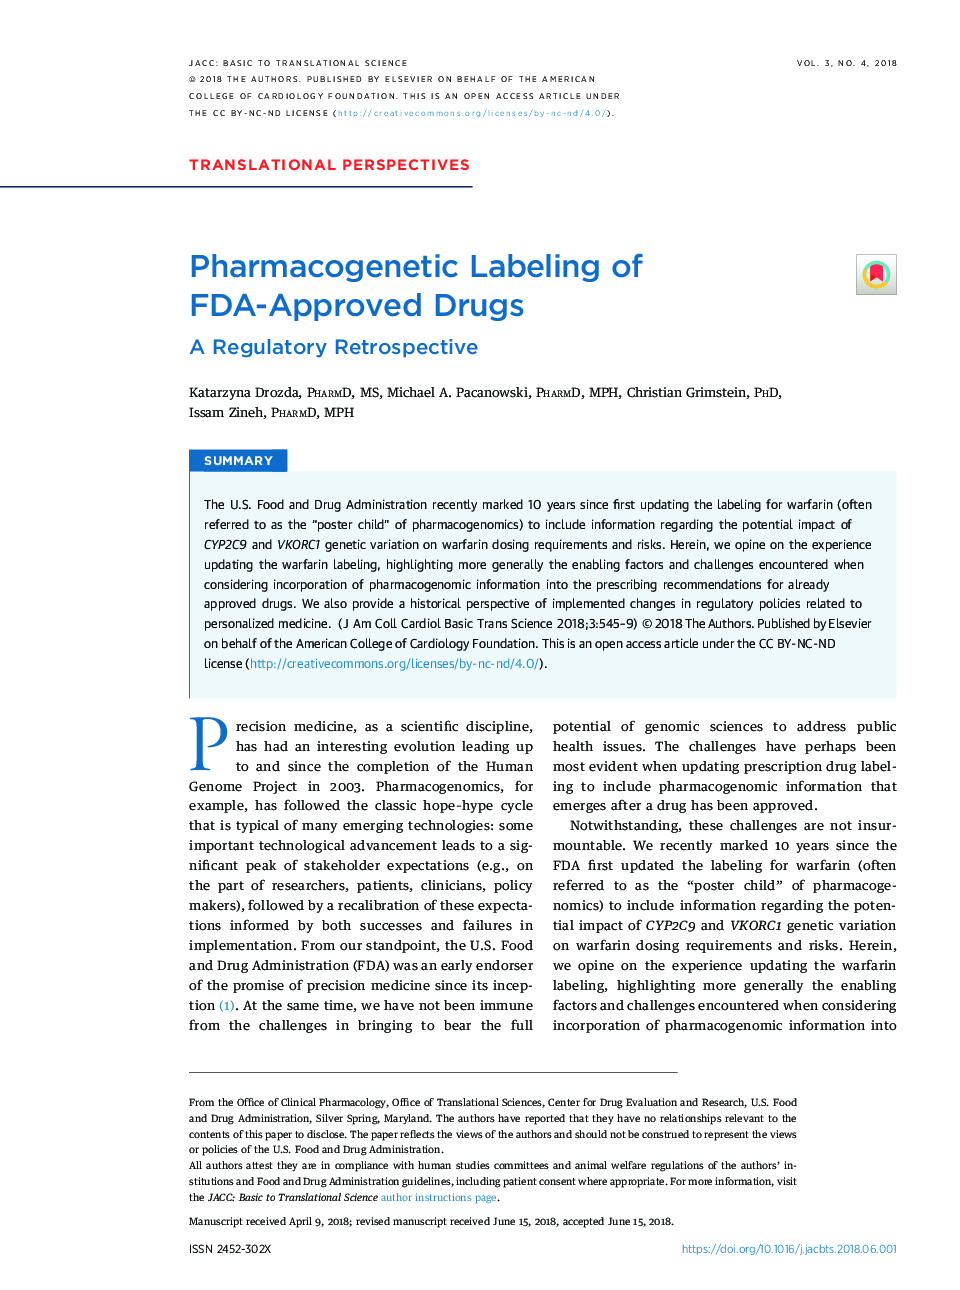 Pharmacogenetic Labeling of FDA-Approved Drugs